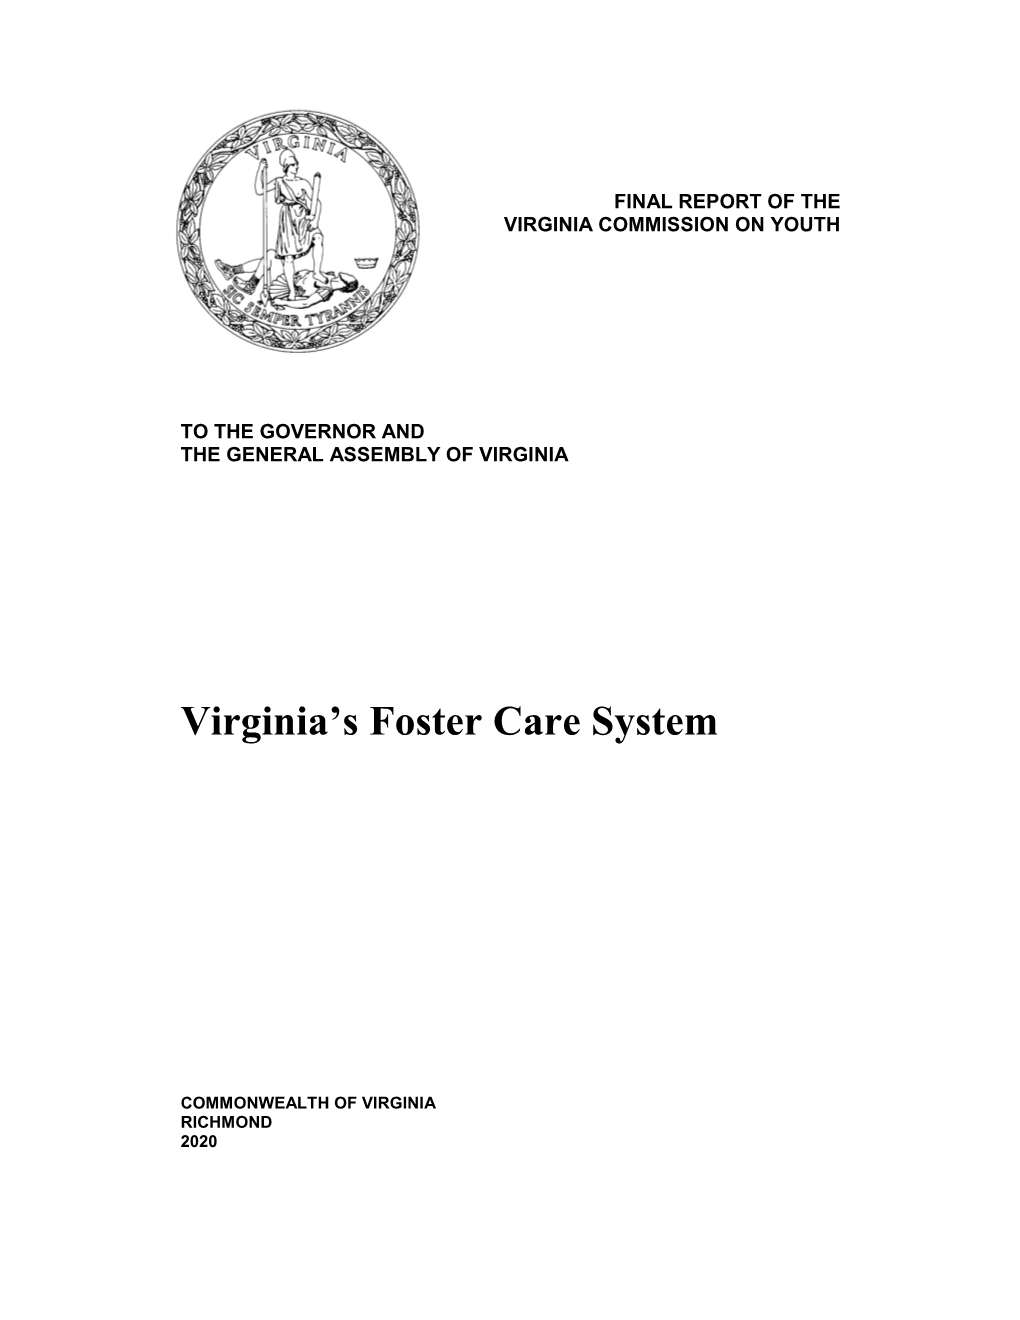 Virginia's Foster Care System